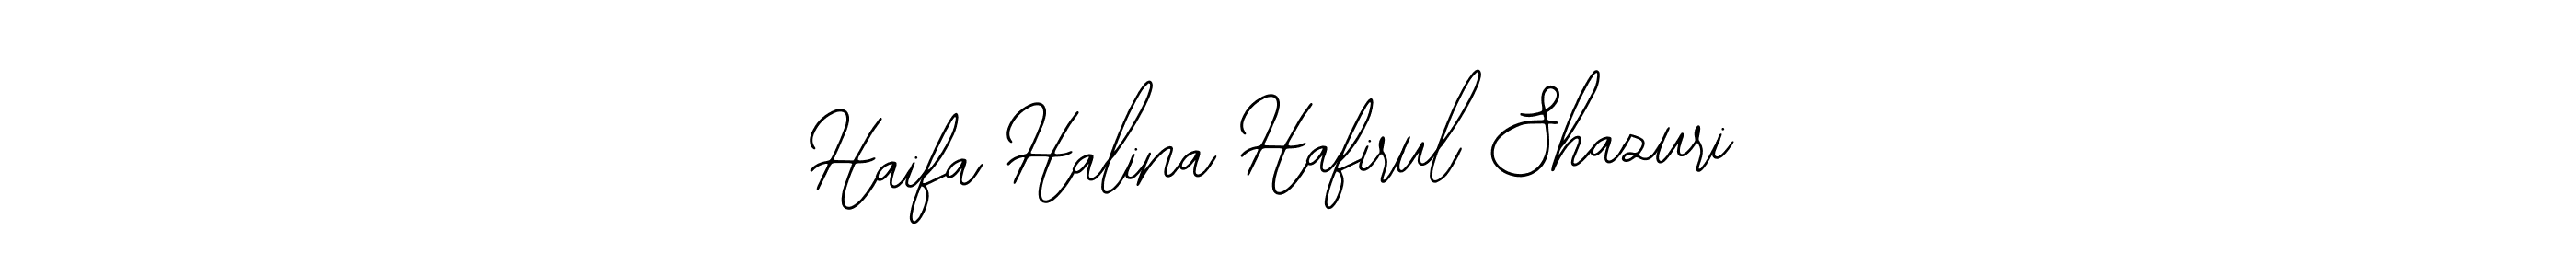 Use a signature maker to create a handwritten signature online. With this signature software, you can design (Bearetta-2O07w) your own signature for name Haifa Halina Hafirul Shazuri. Haifa Halina Hafirul Shazuri signature style 12 images and pictures png